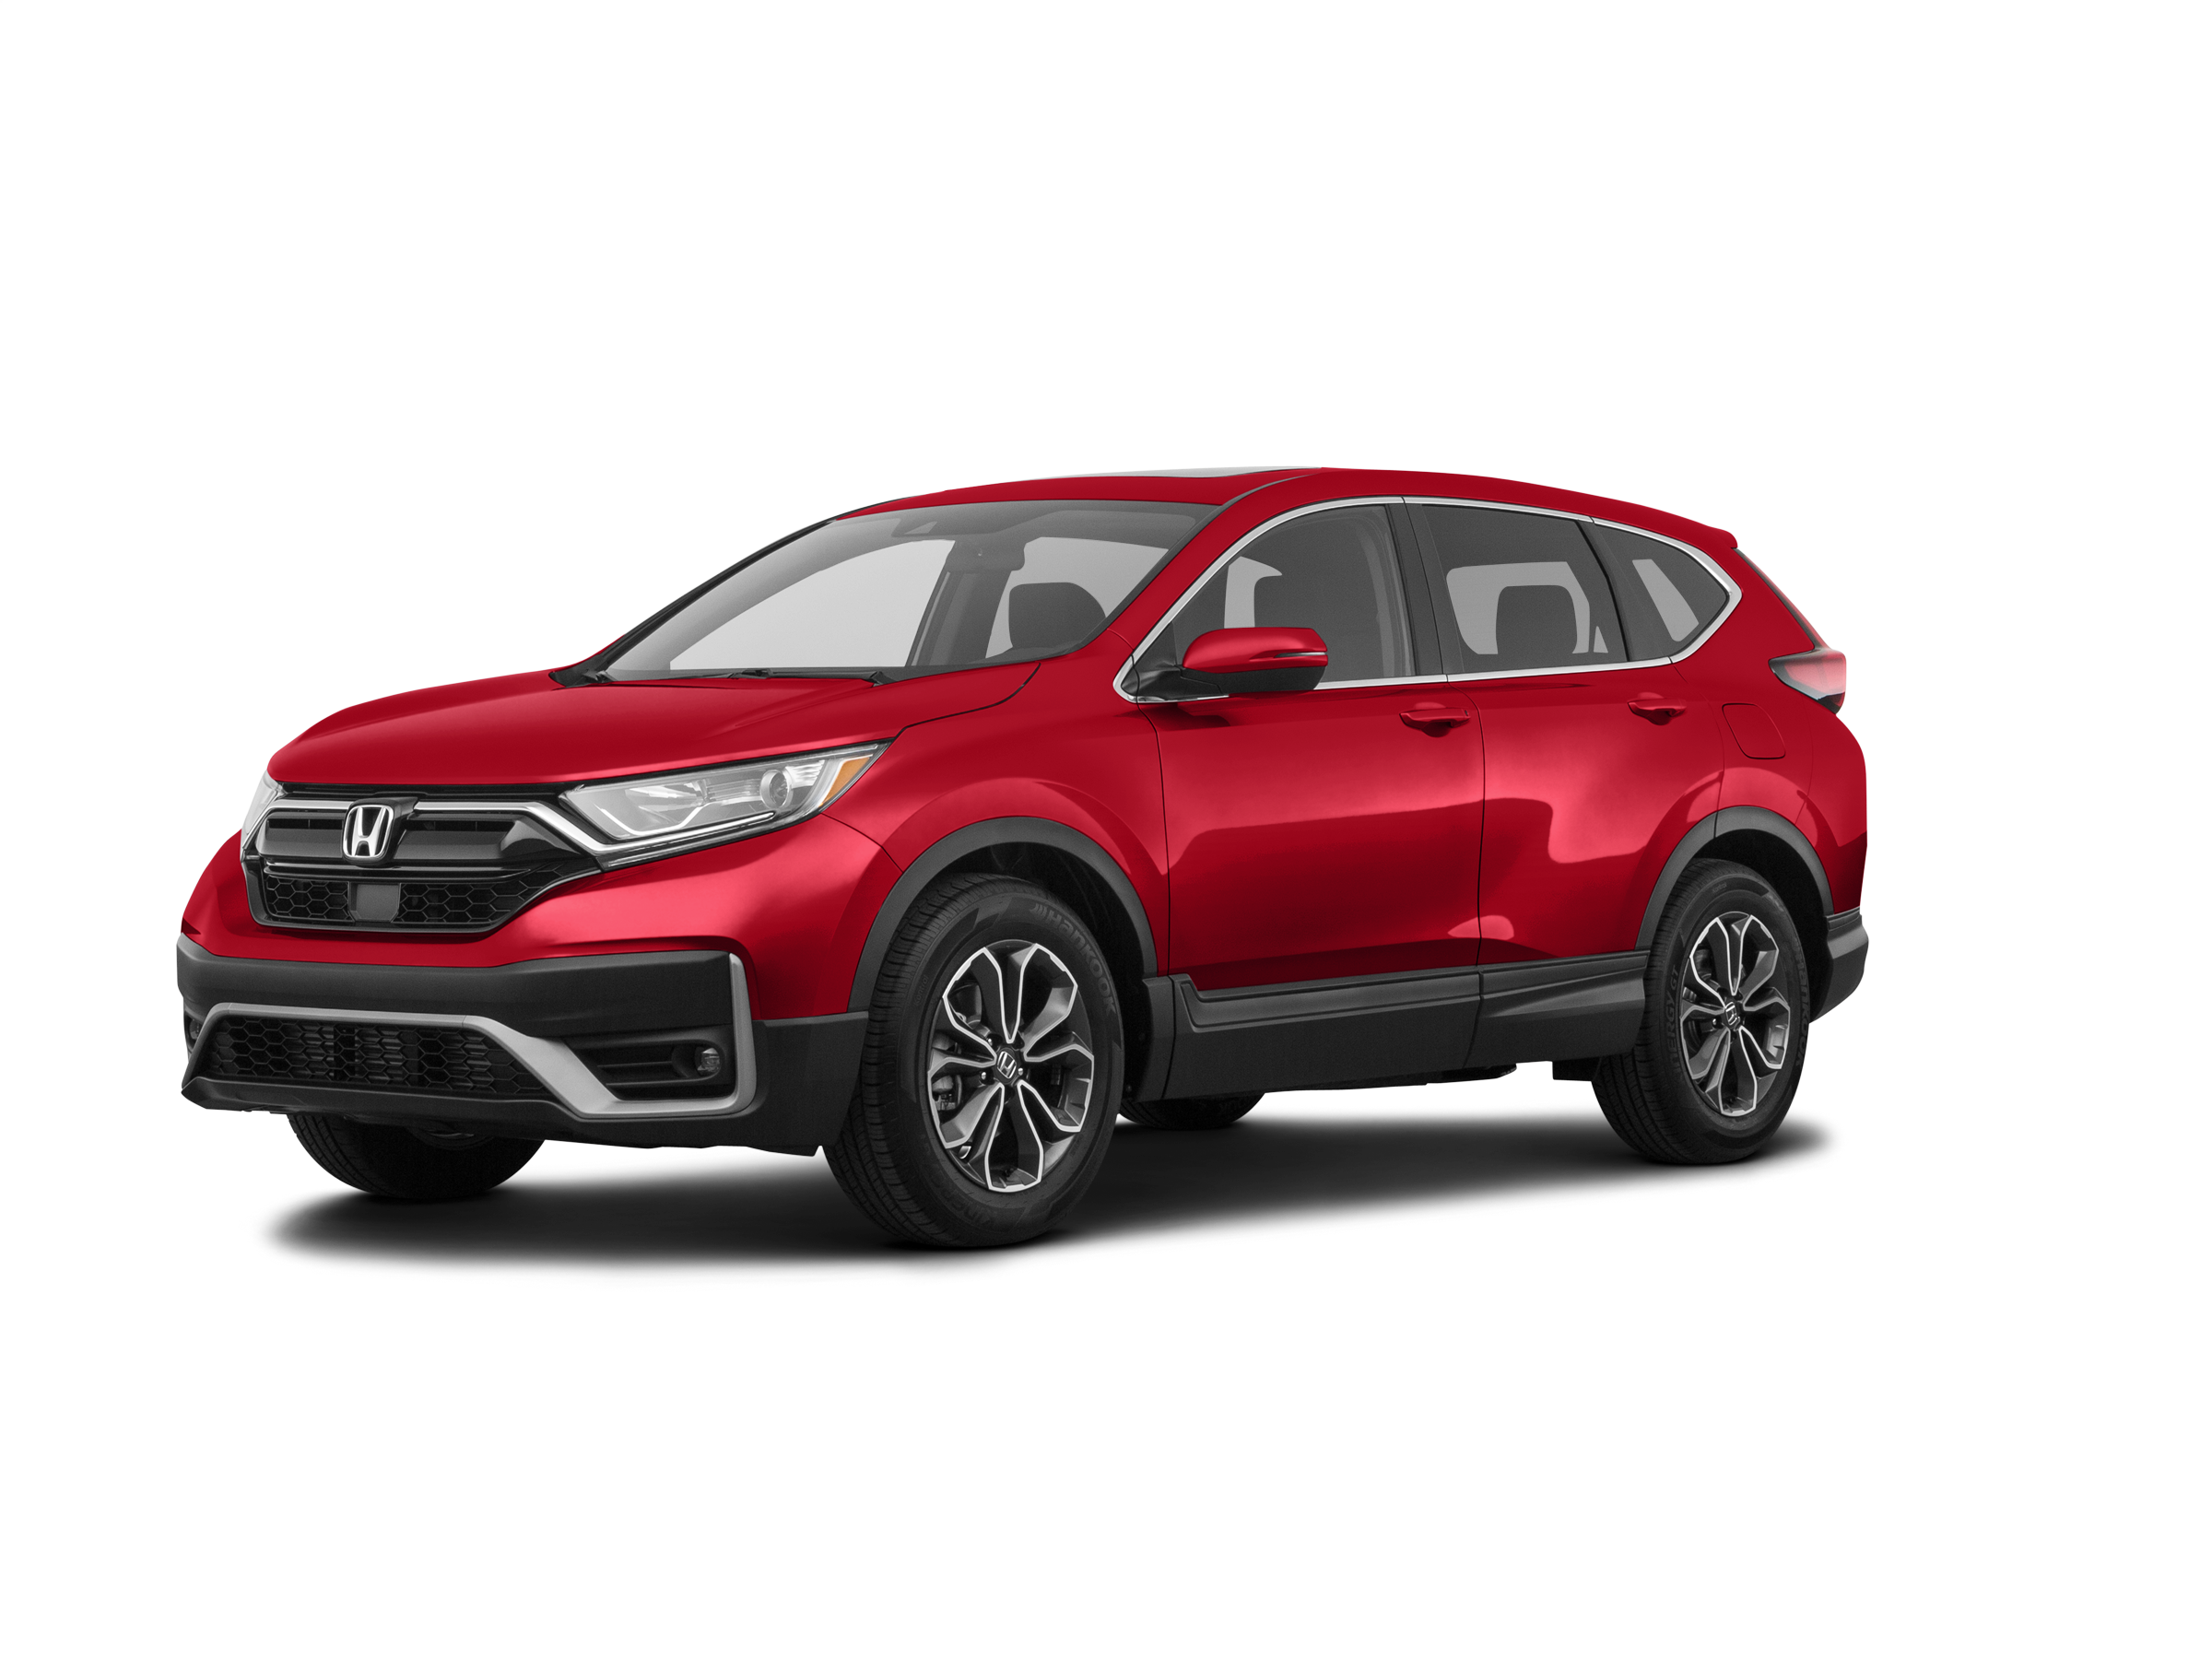 2021 Honda CR-V Price, Value, Ratings & Reviews